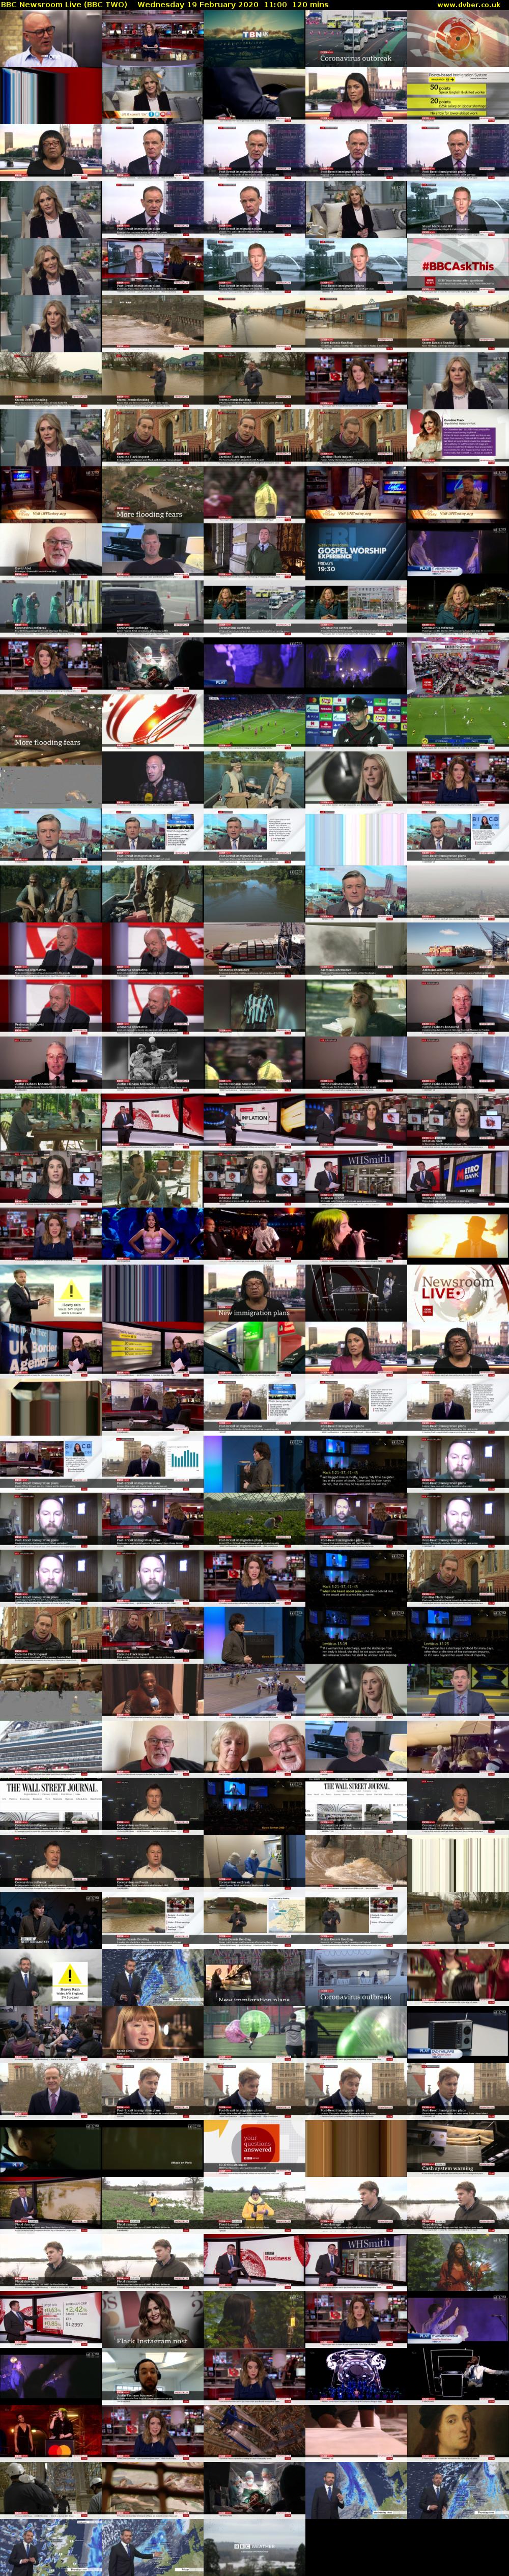 BBC Newsroom Live (BBC TWO) Wednesday 19 February 2020 11:00 - 13:00